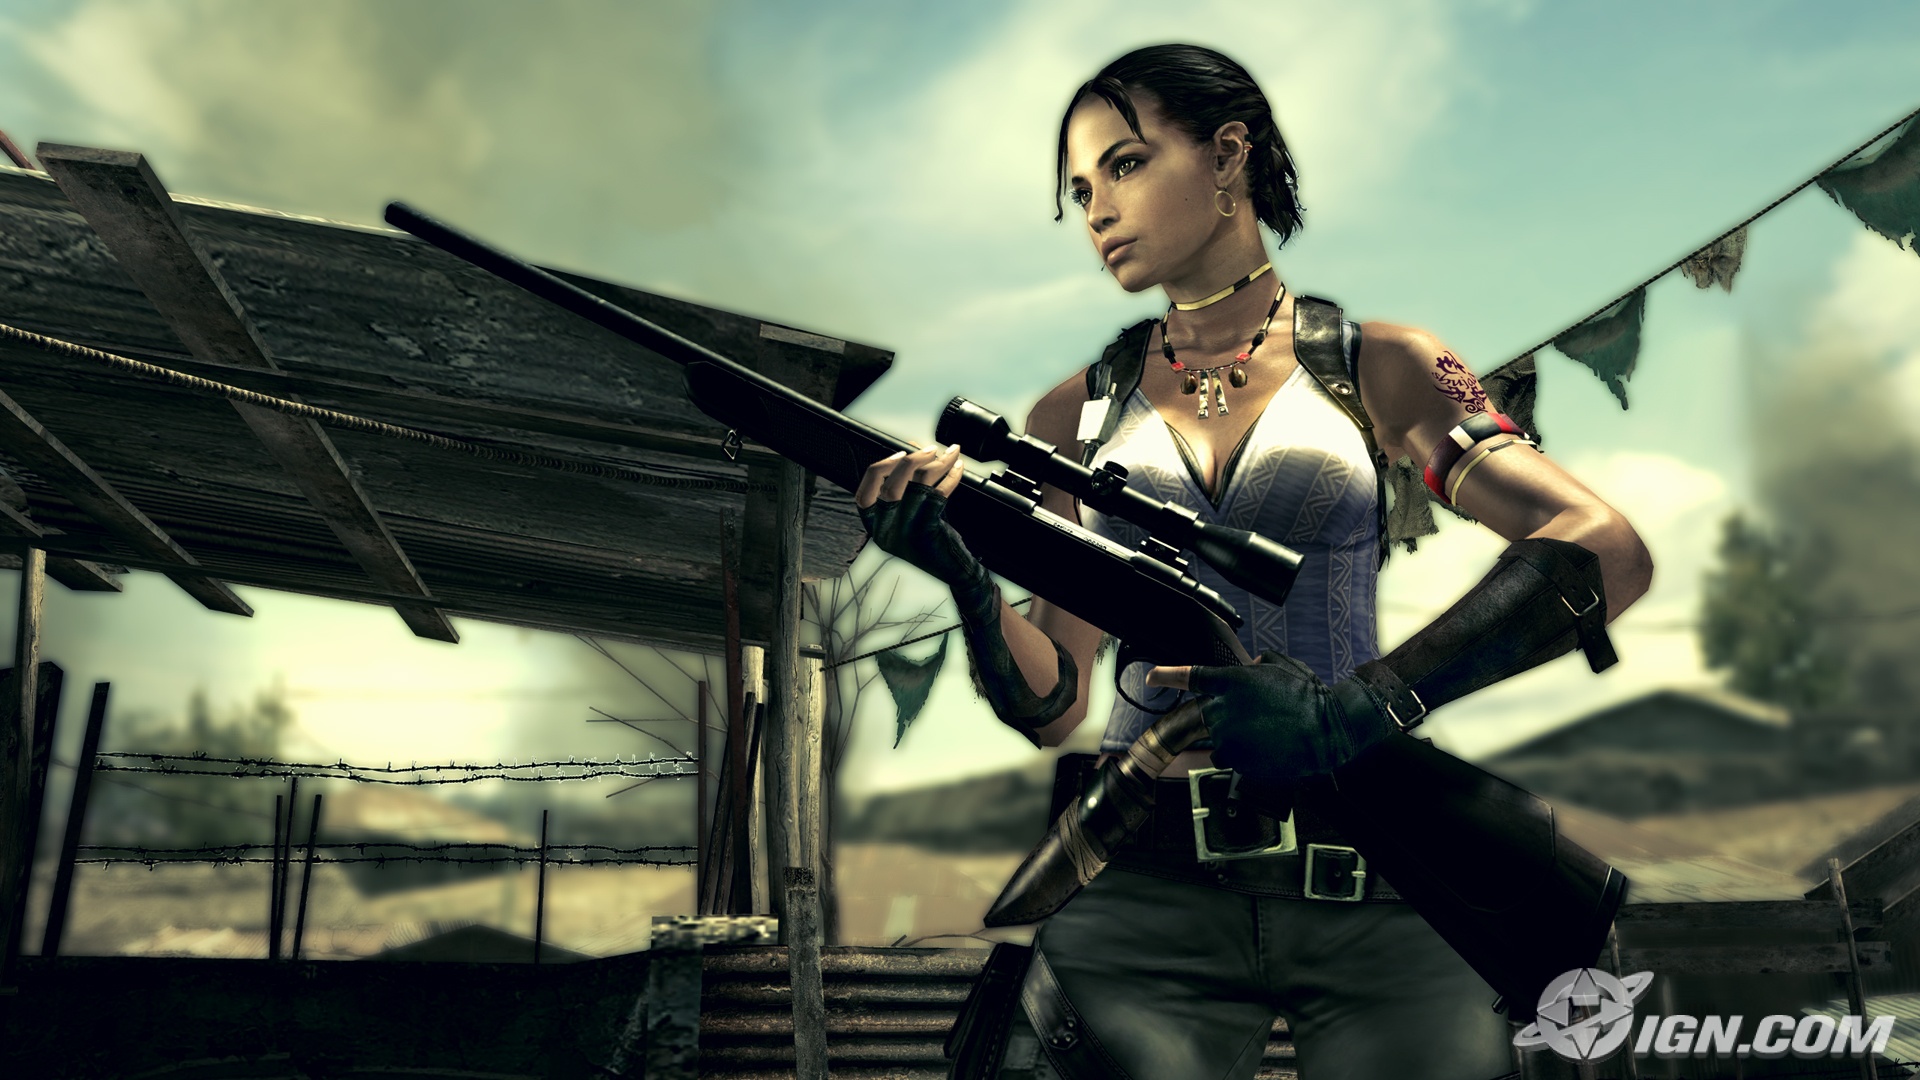 Resident Evil, девушки с оружием, Шева Аломар - обои на рабочий стол